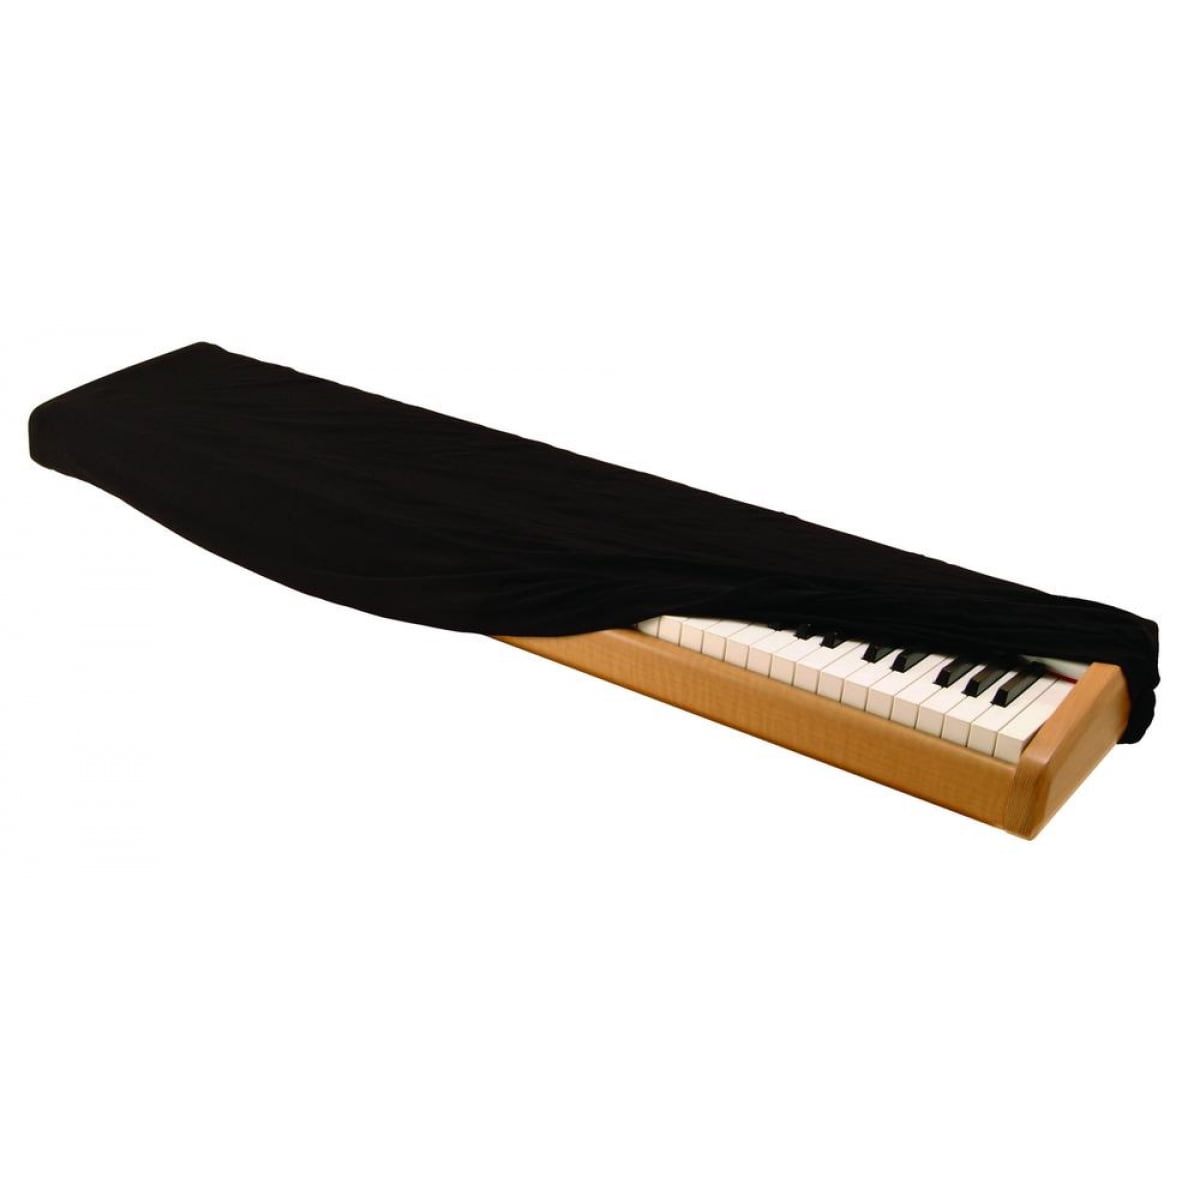 DCFY Music Keyboard Dust Cover for KORG Pa 700 Oriental Black Nylon Premium Quality! 